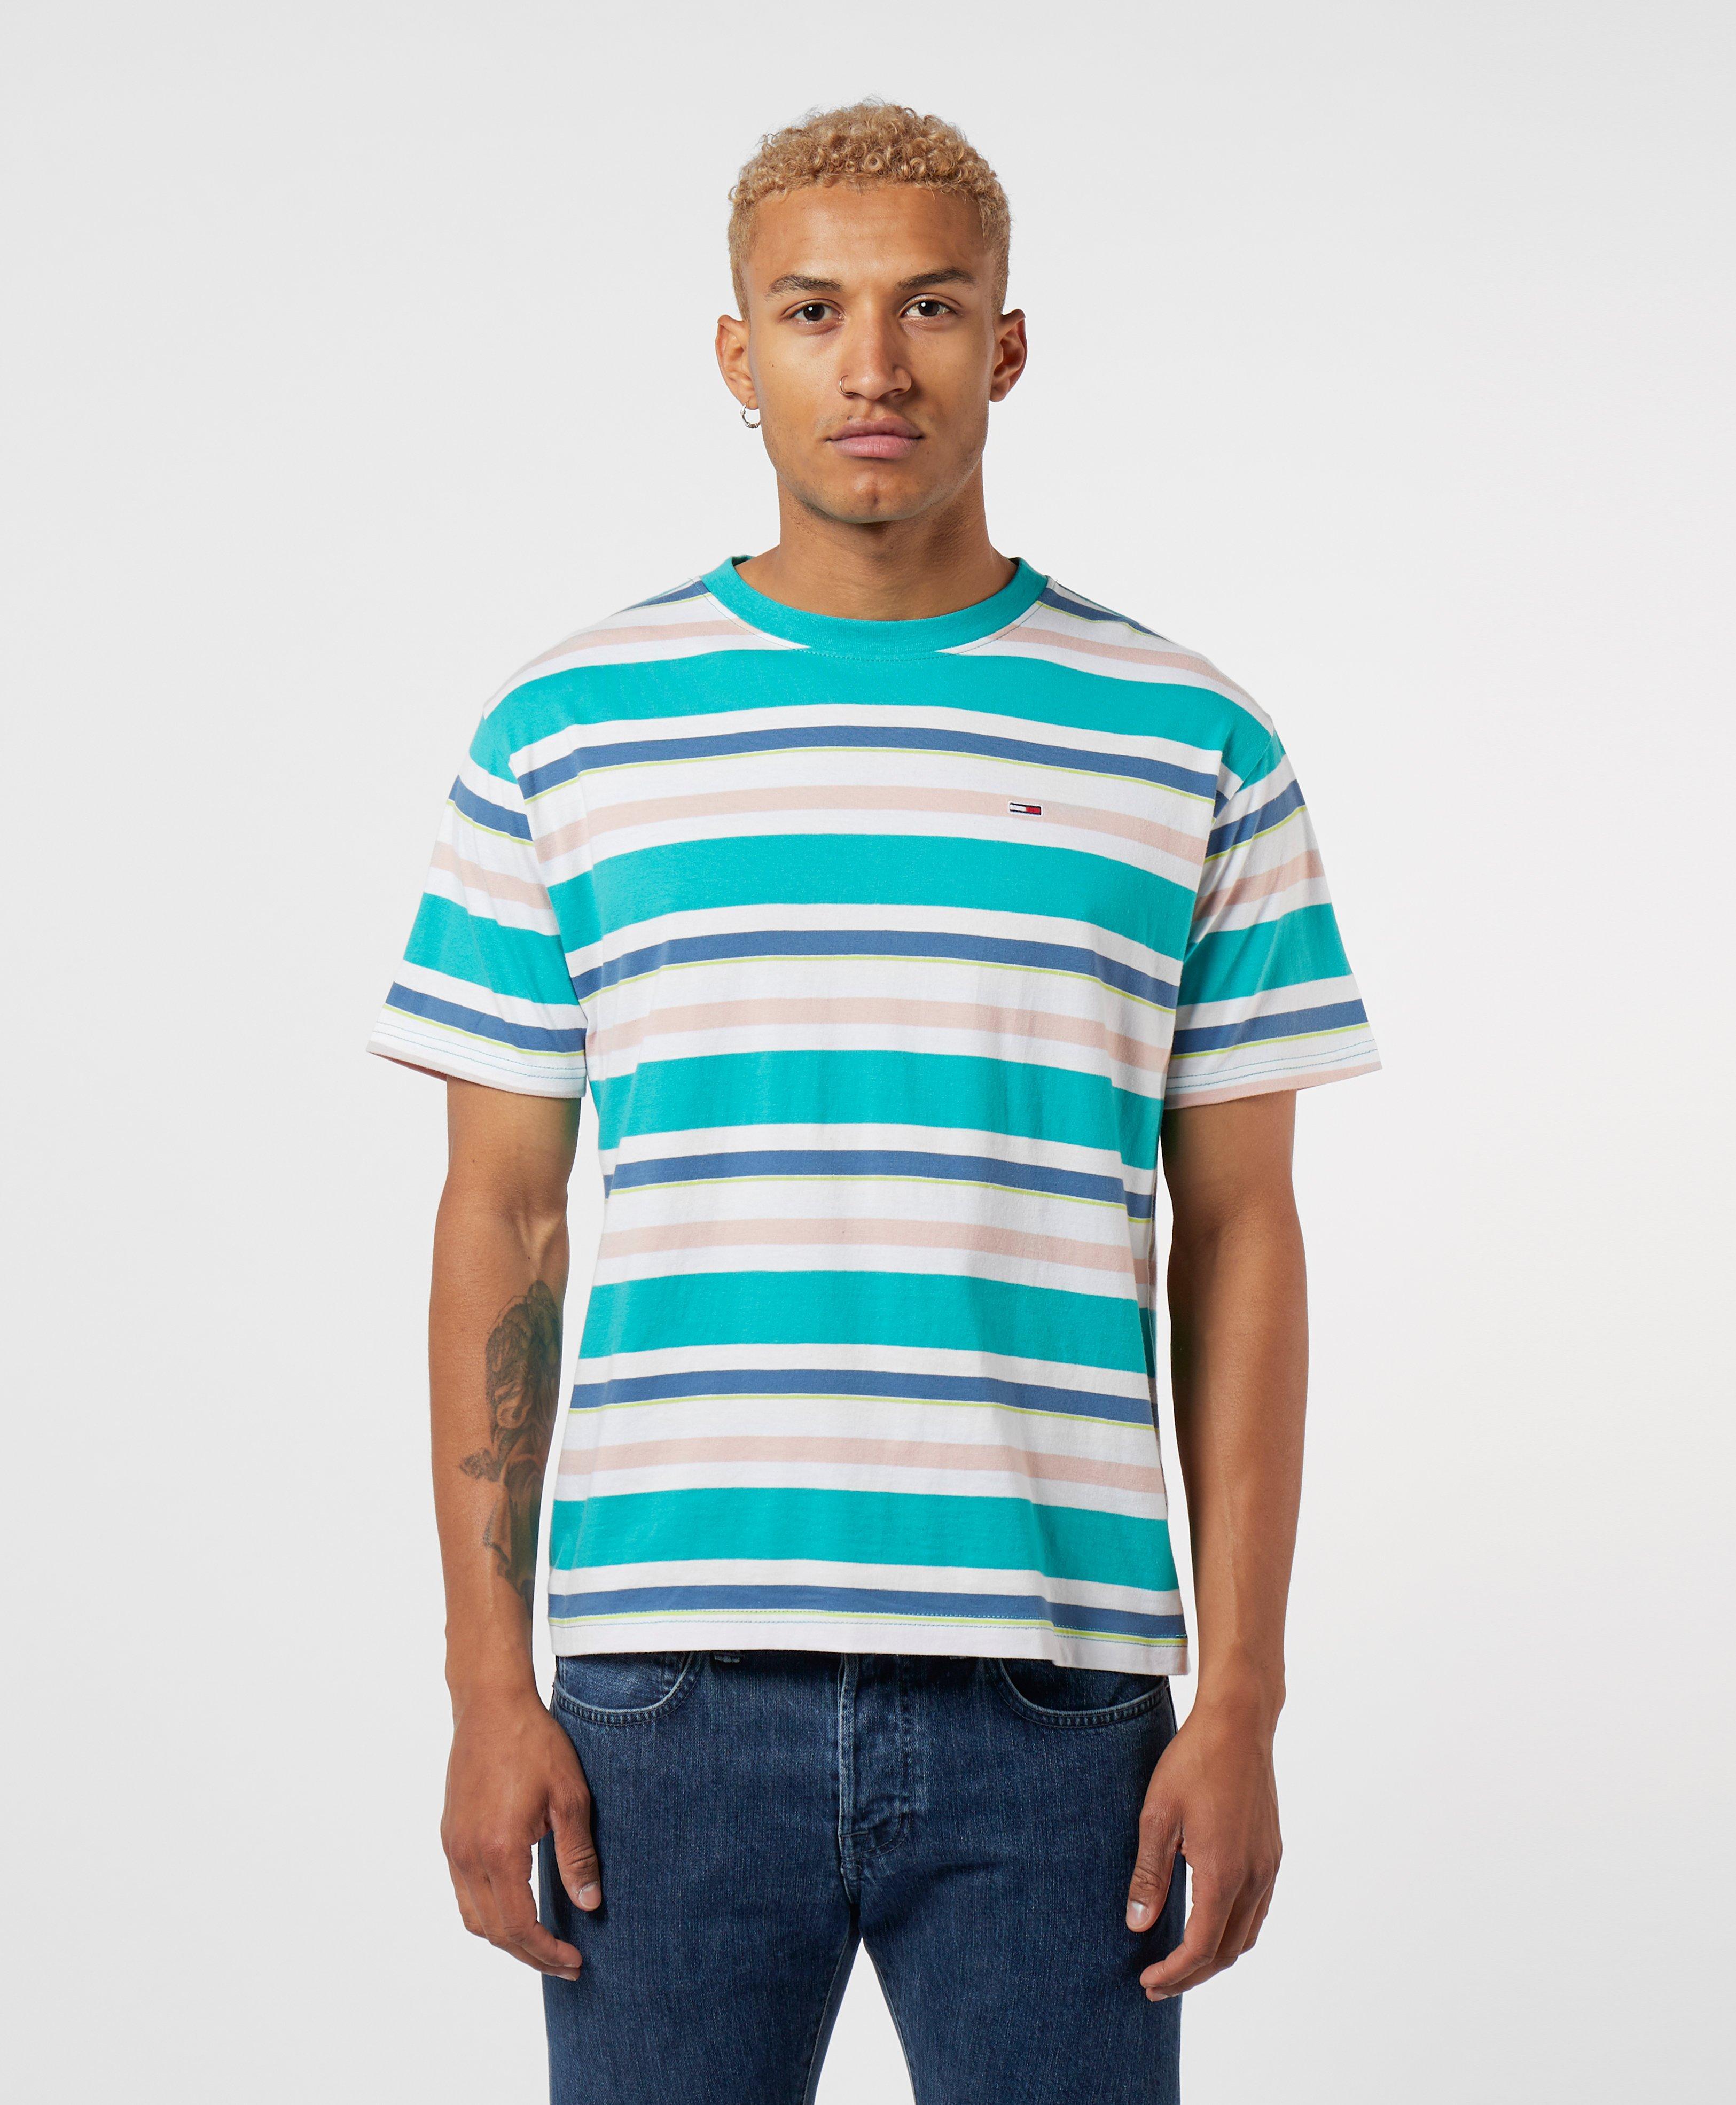 Tommy Hilfiger Multi Stripe Short Sleeve T-shirt in Blue for Men - Lyst